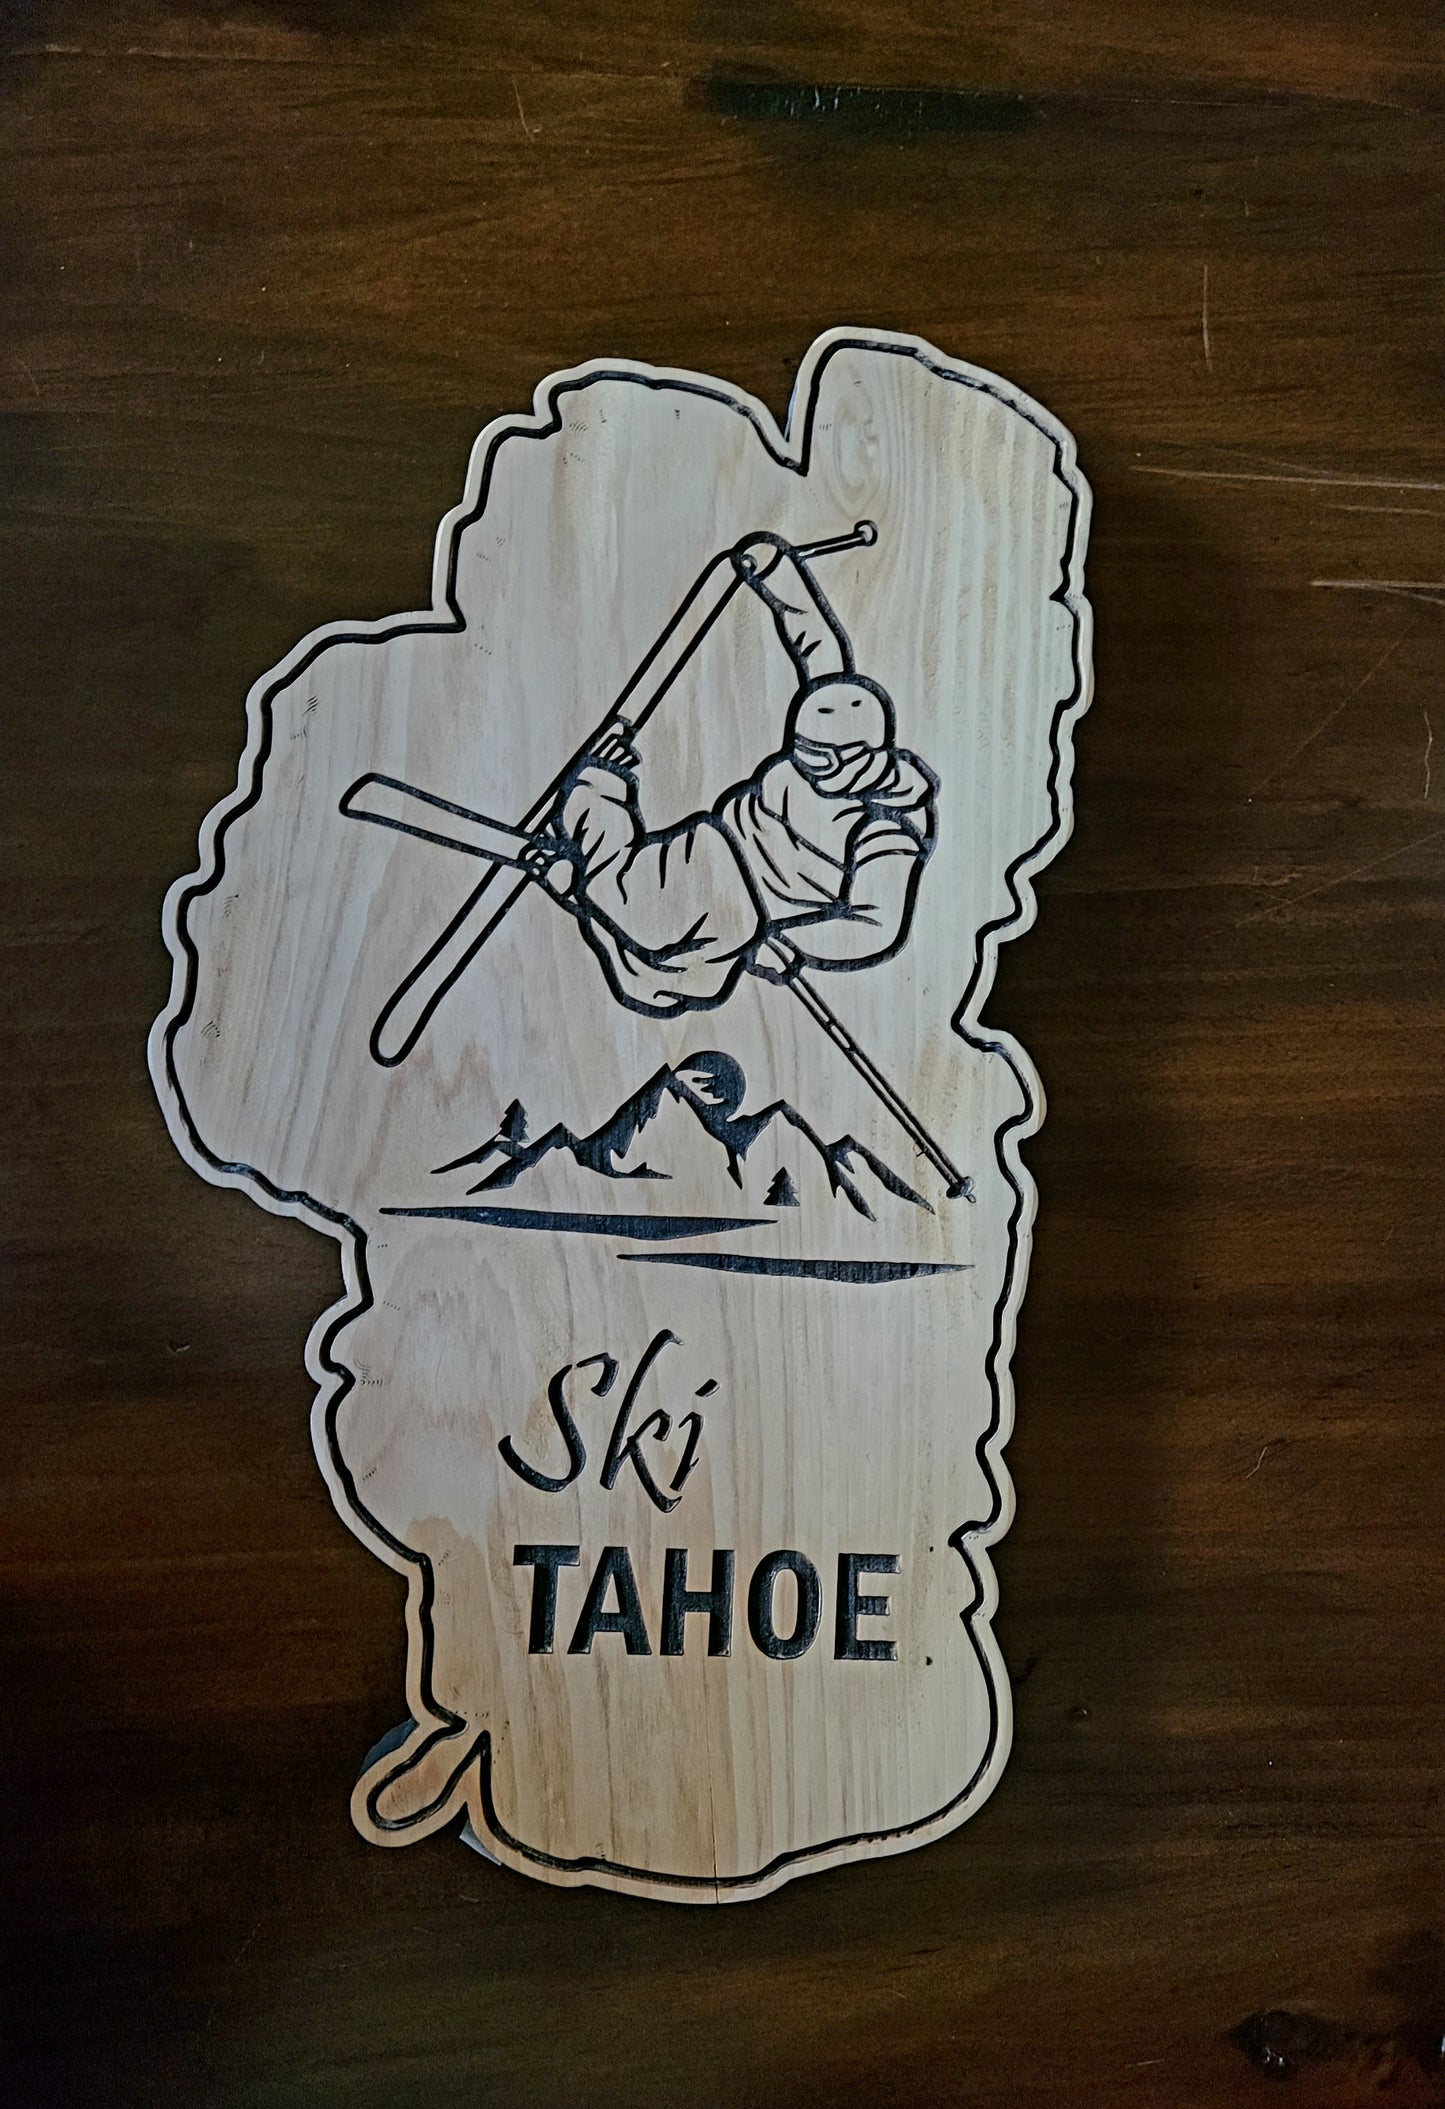 Lake Shaped Ski Tahoe Rustic Wood Sign